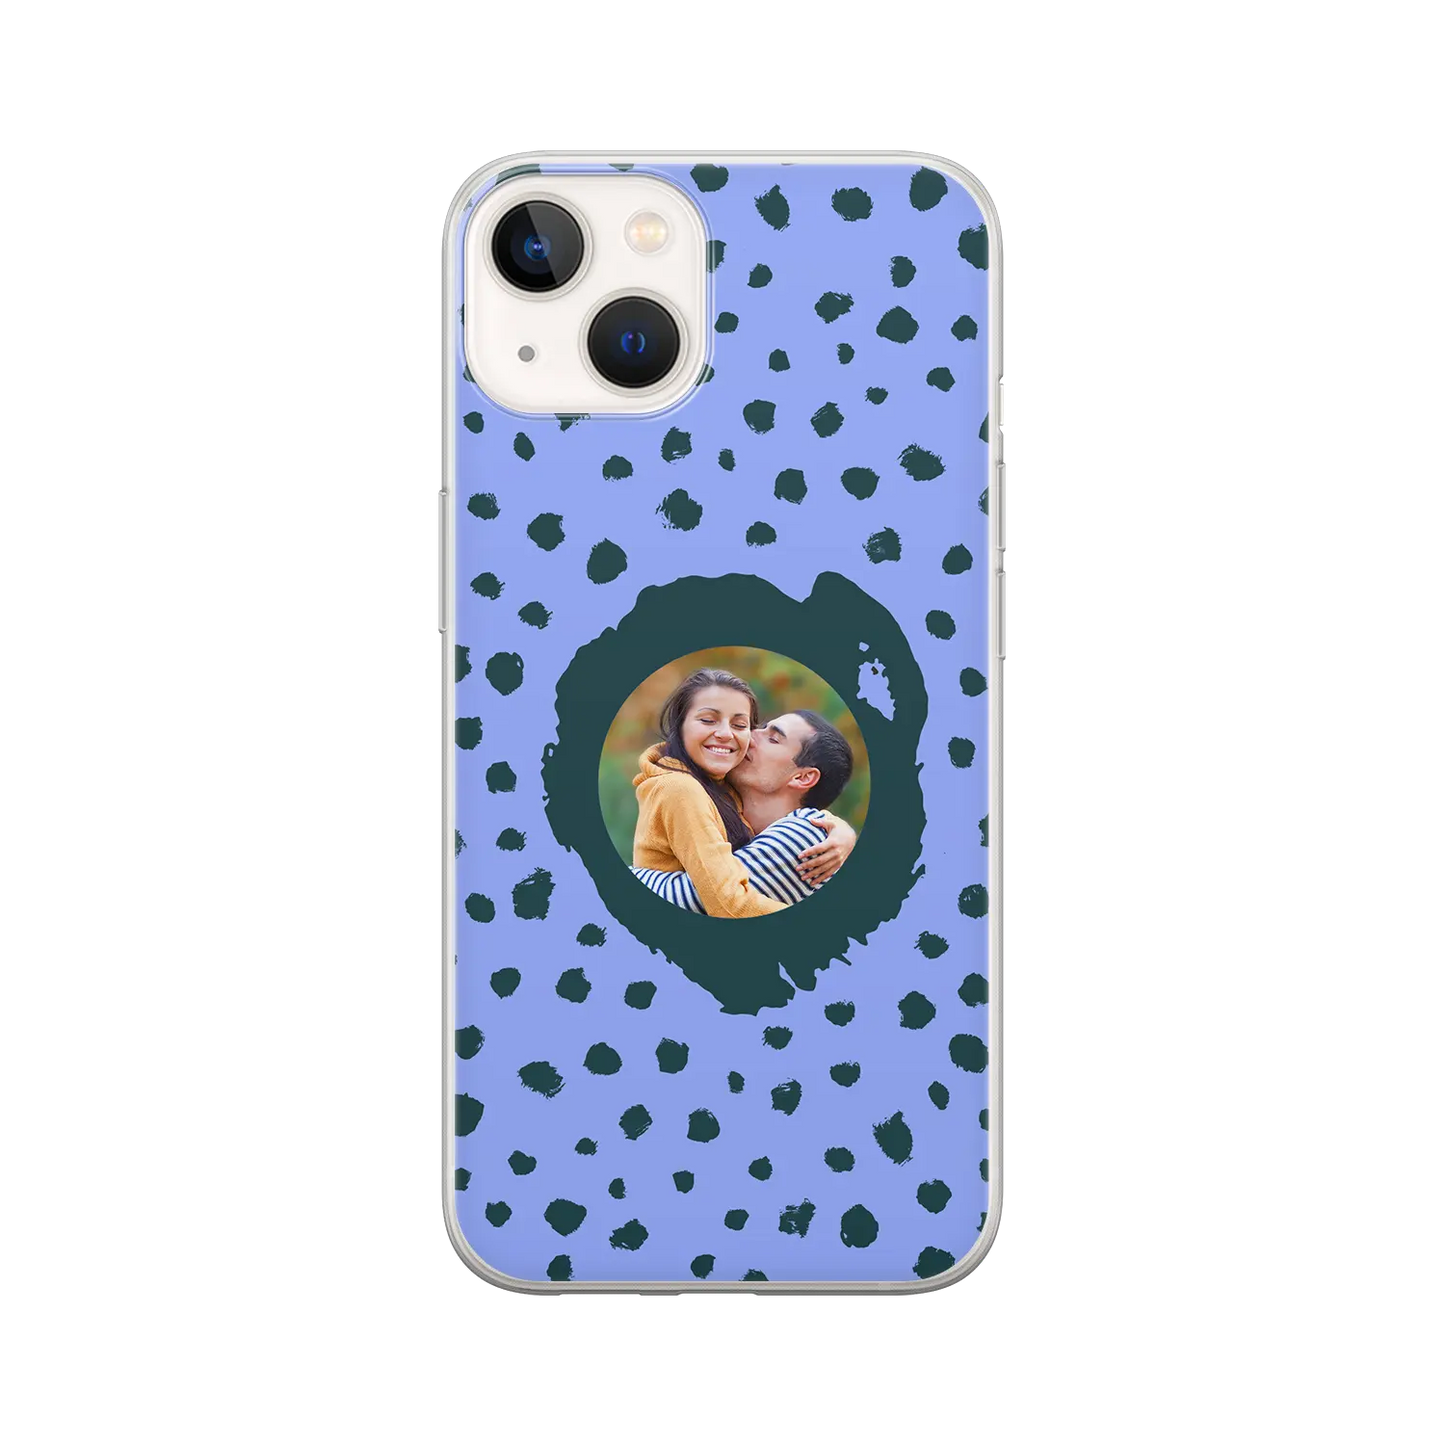 Grunge Dots Photo Style - Personalised iPhone Case